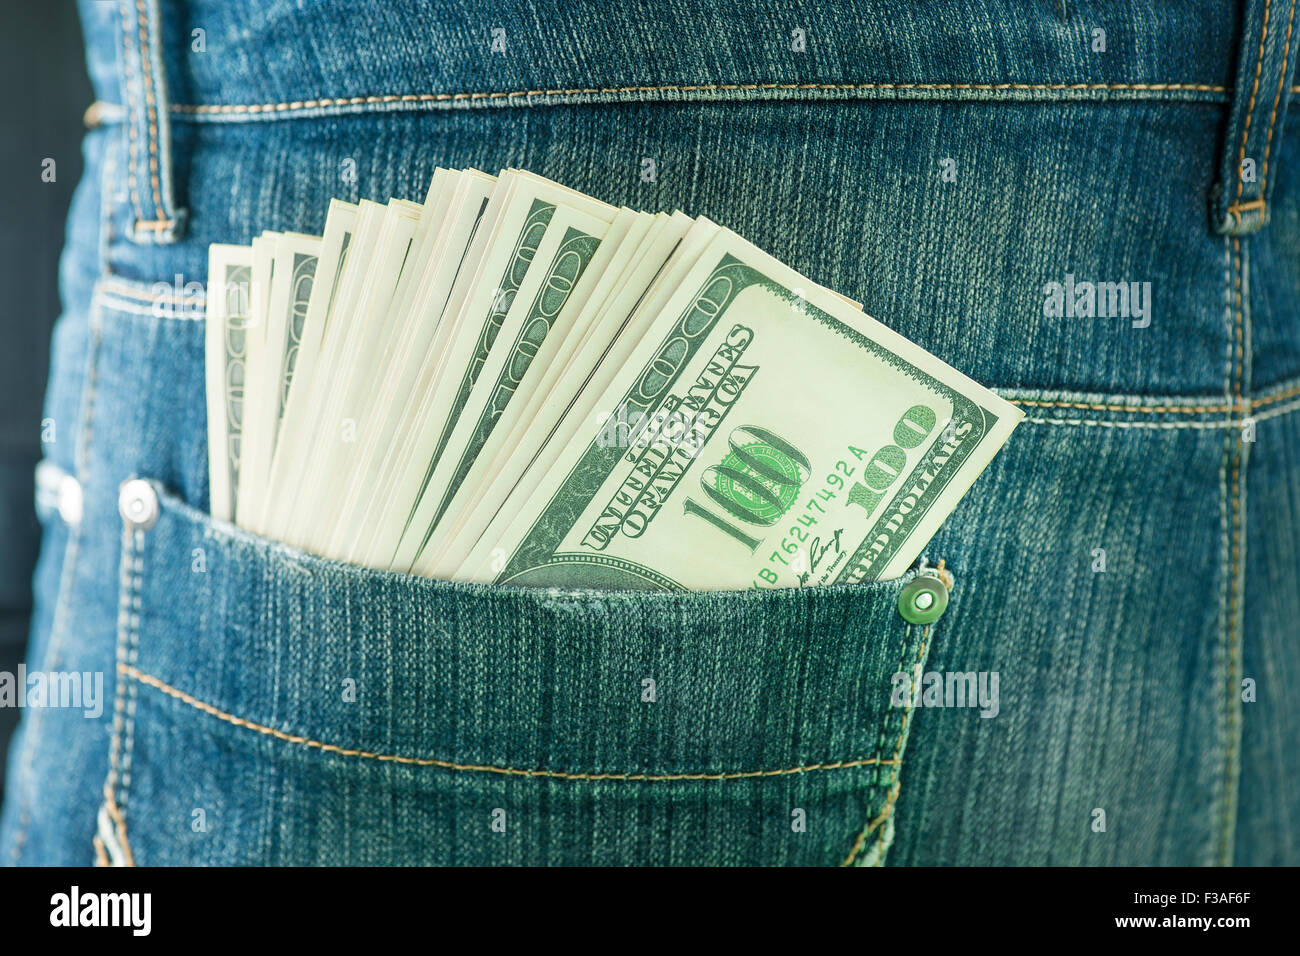 Back pocket containing 100 US dollar banknotes, close up. Stock Photo